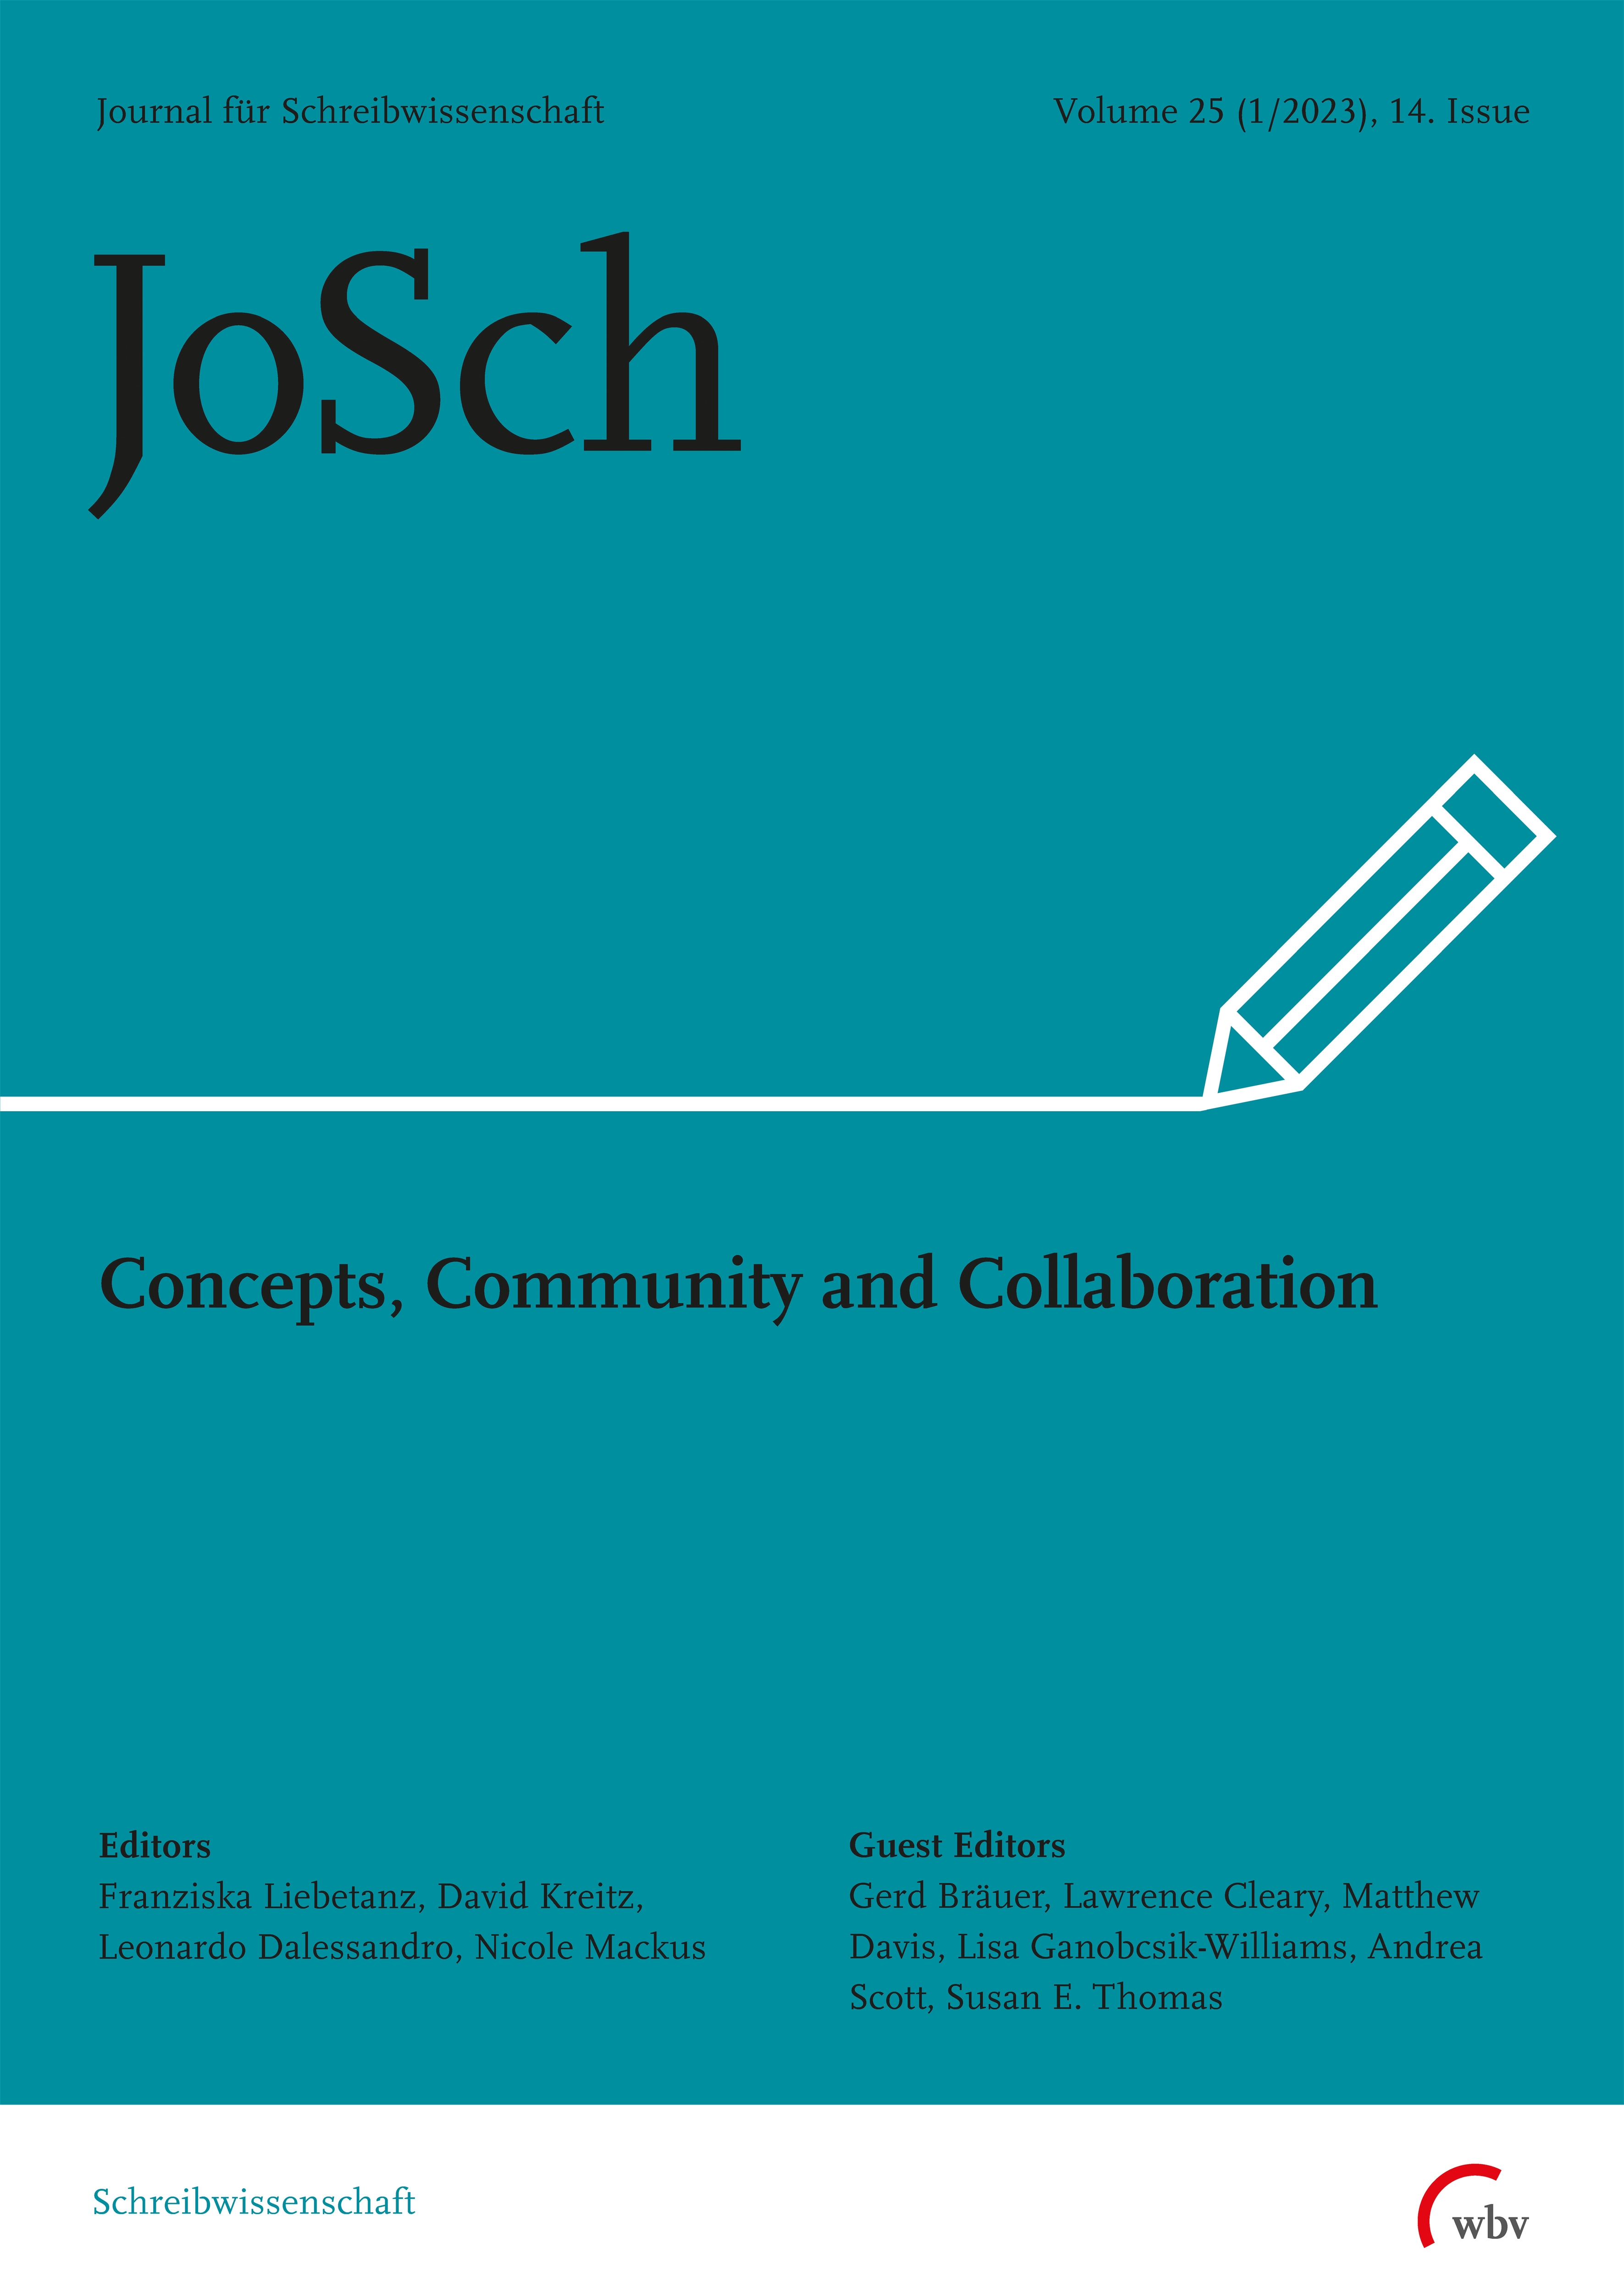 Ausgabe 25: Concepts, Community and Collaboration